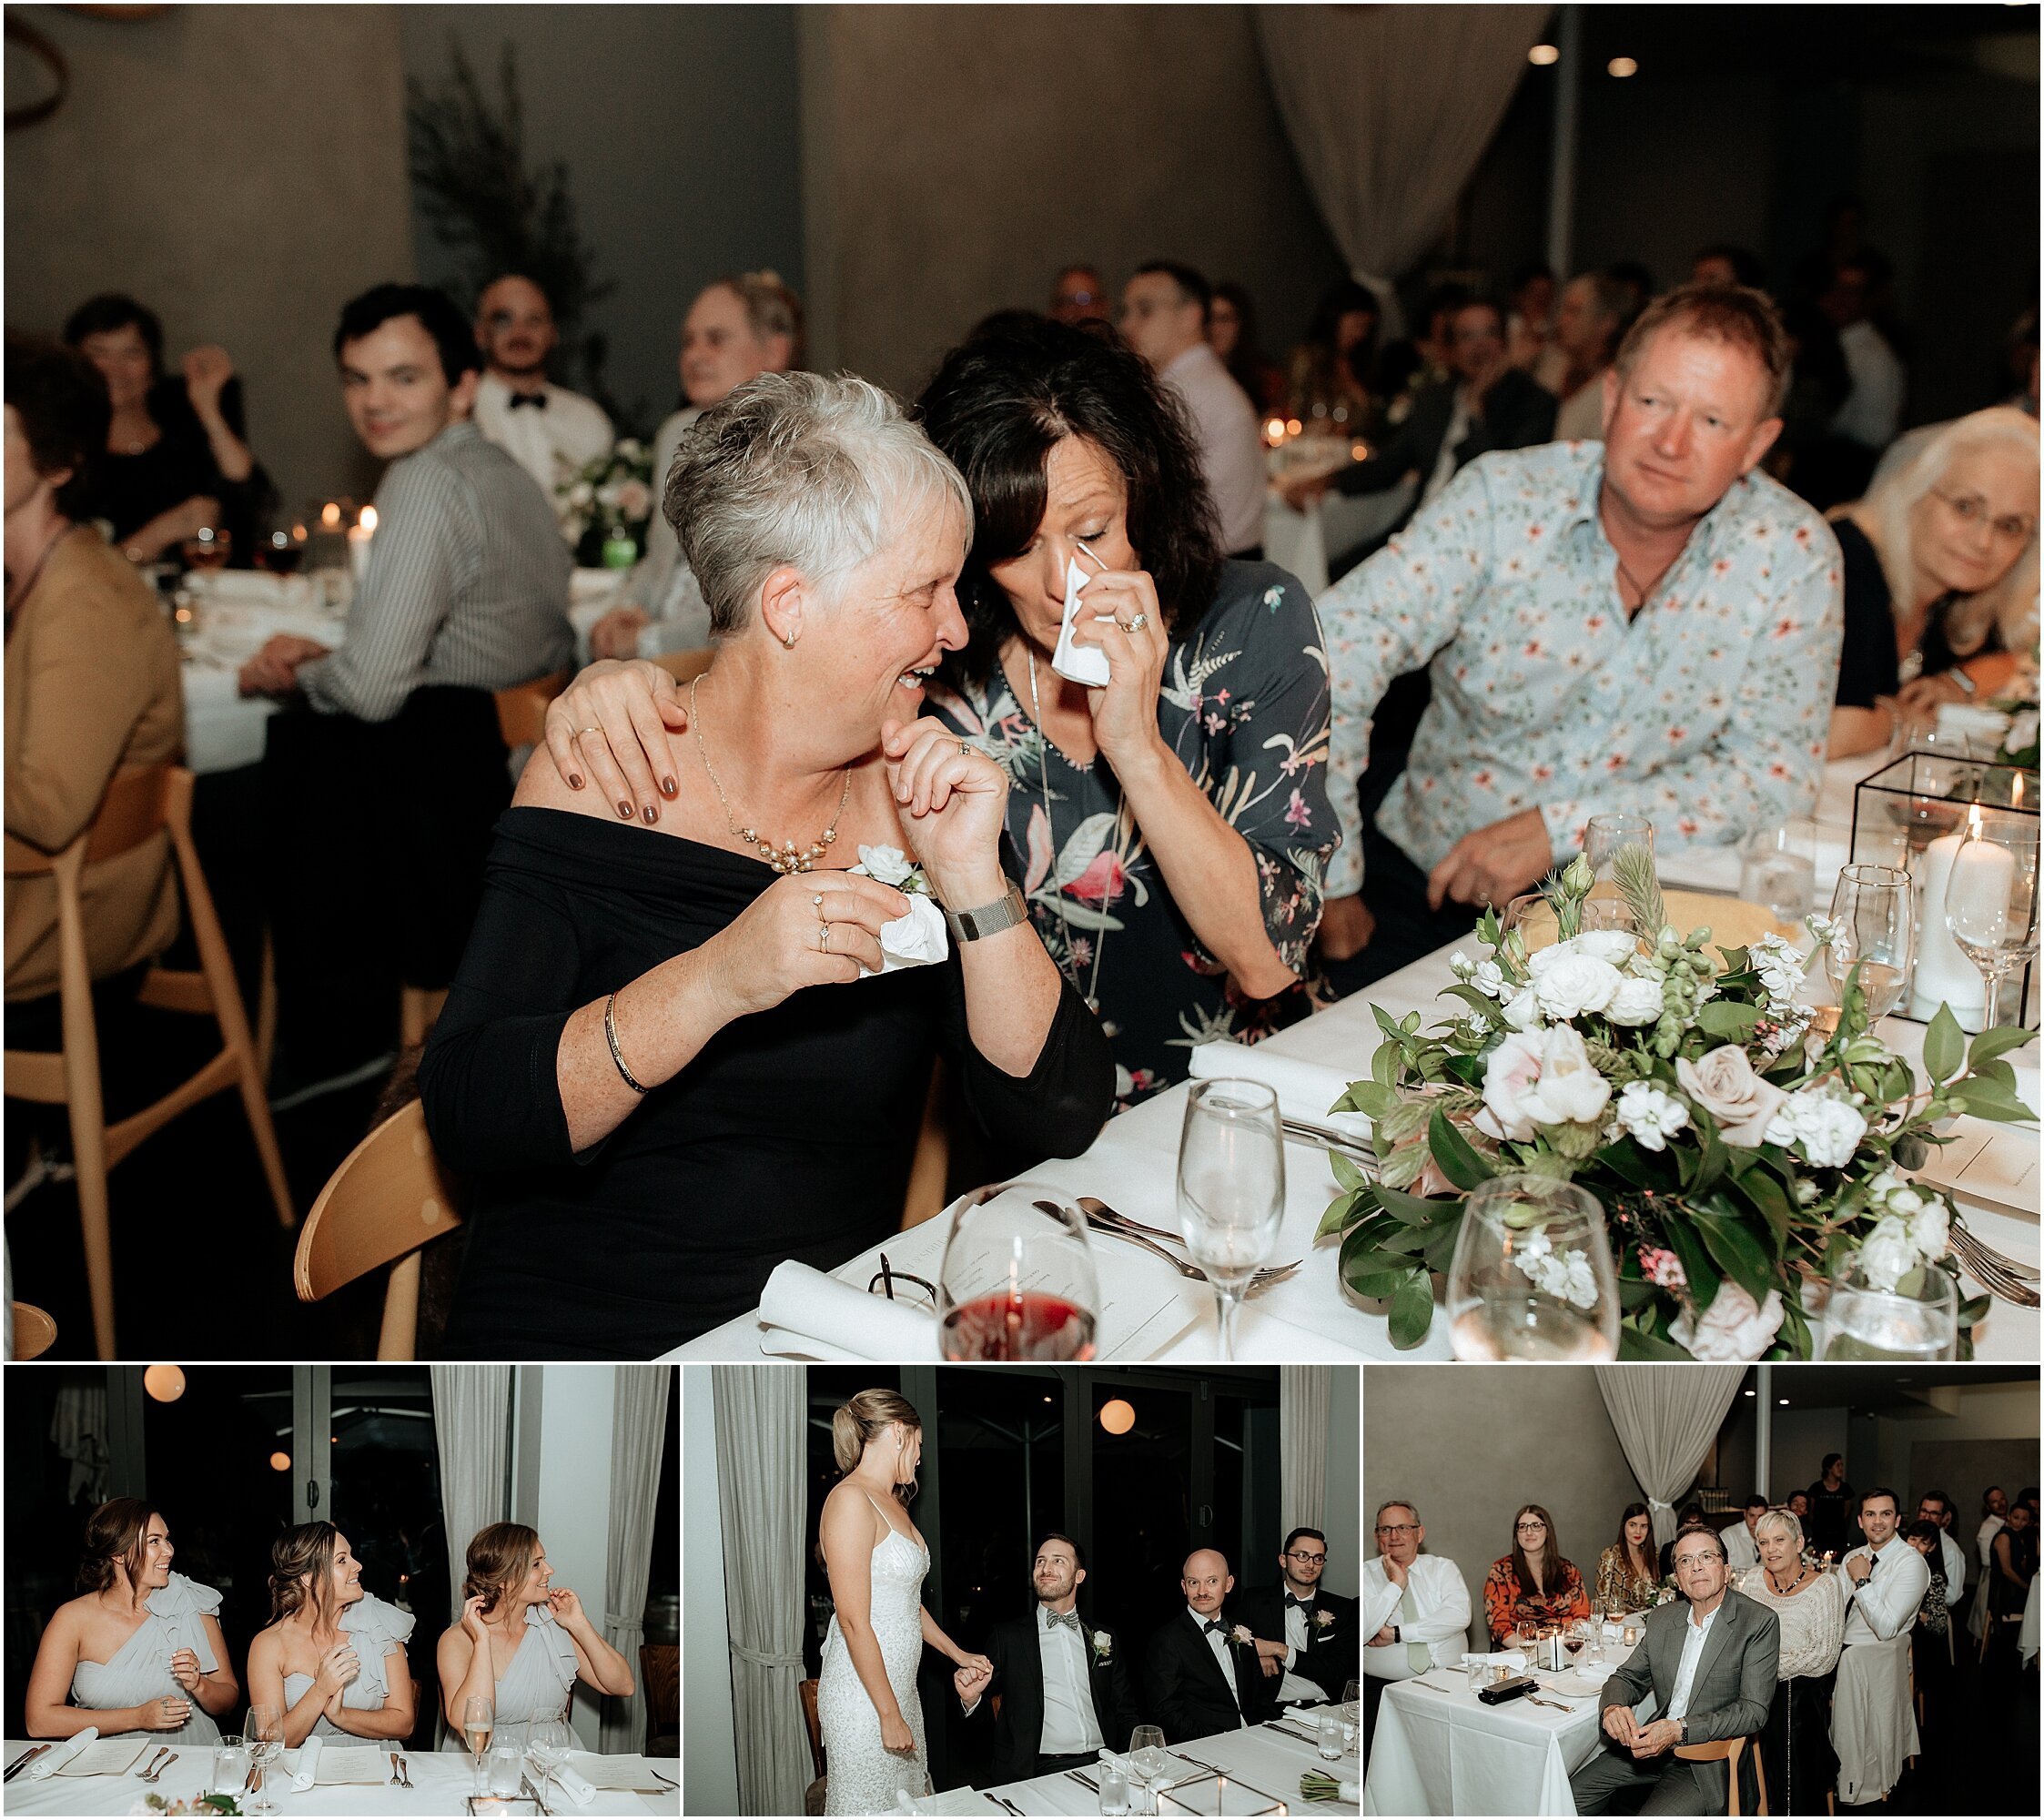 Zanda+Auckland+wedding+photographer+chic+vibrant+Cable+Bay+vineyard+venue+Waiheke+Island+New+Zealand_61.jpeg